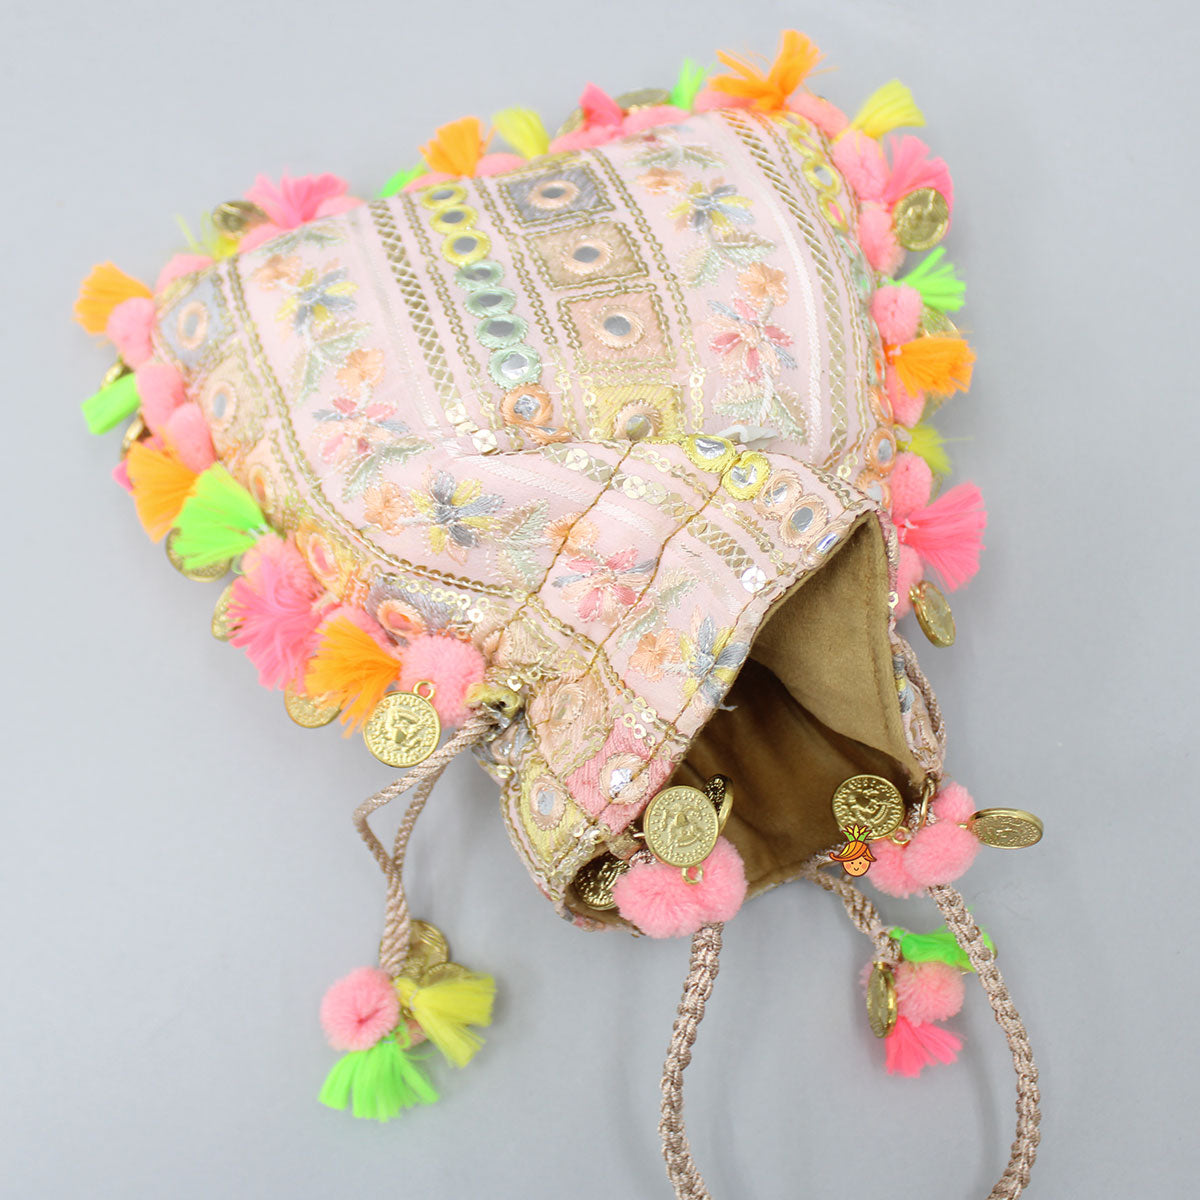 Stunning Embroidered Pom Poms And Fringed Tassels Detailed Potli Bag